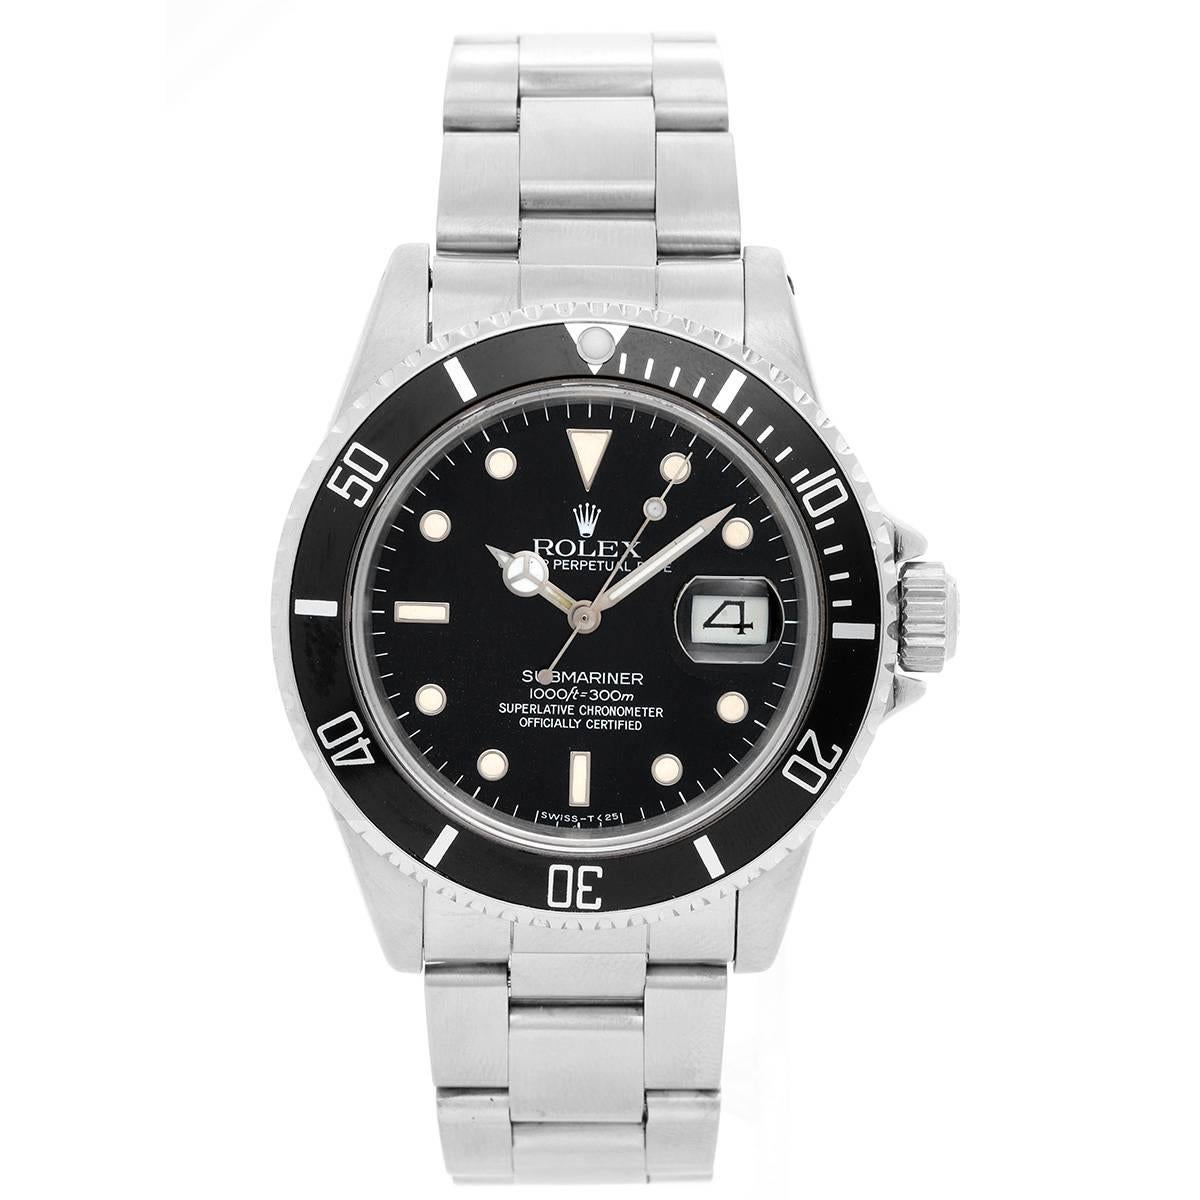 Rolex Stainless Steel Submariner Diver Automatic Wristwatch ref 16610 